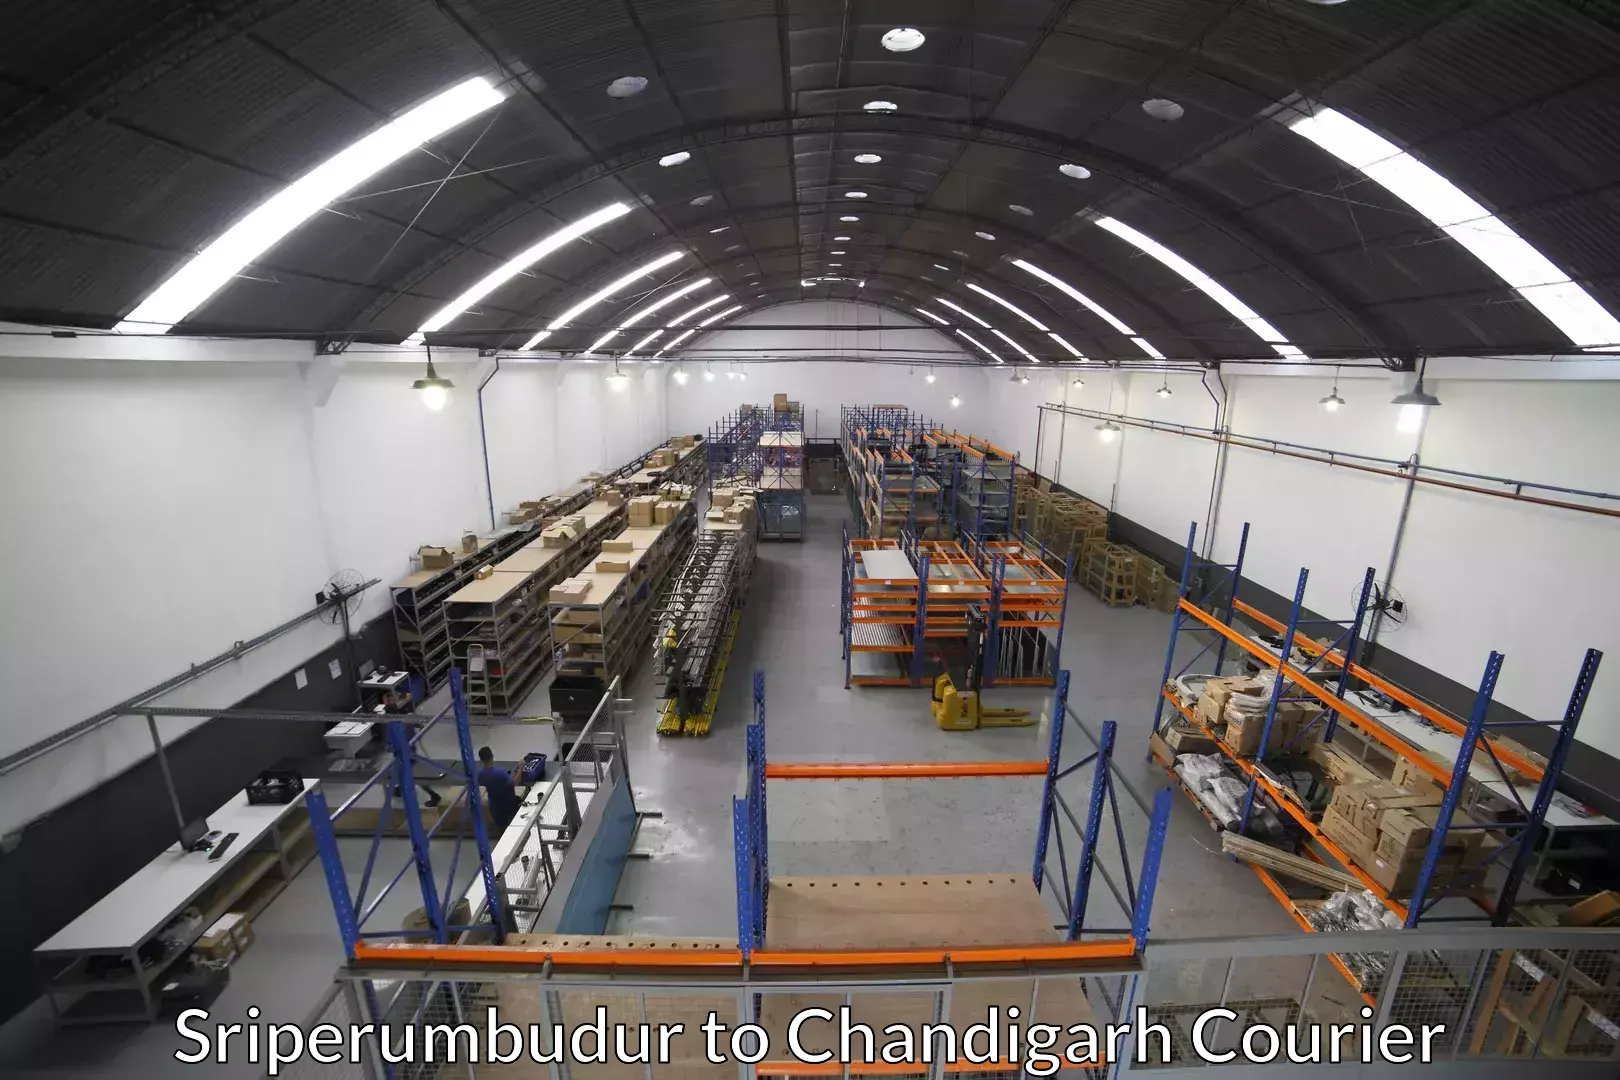 Trusted relocation experts Sriperumbudur to Chandigarh